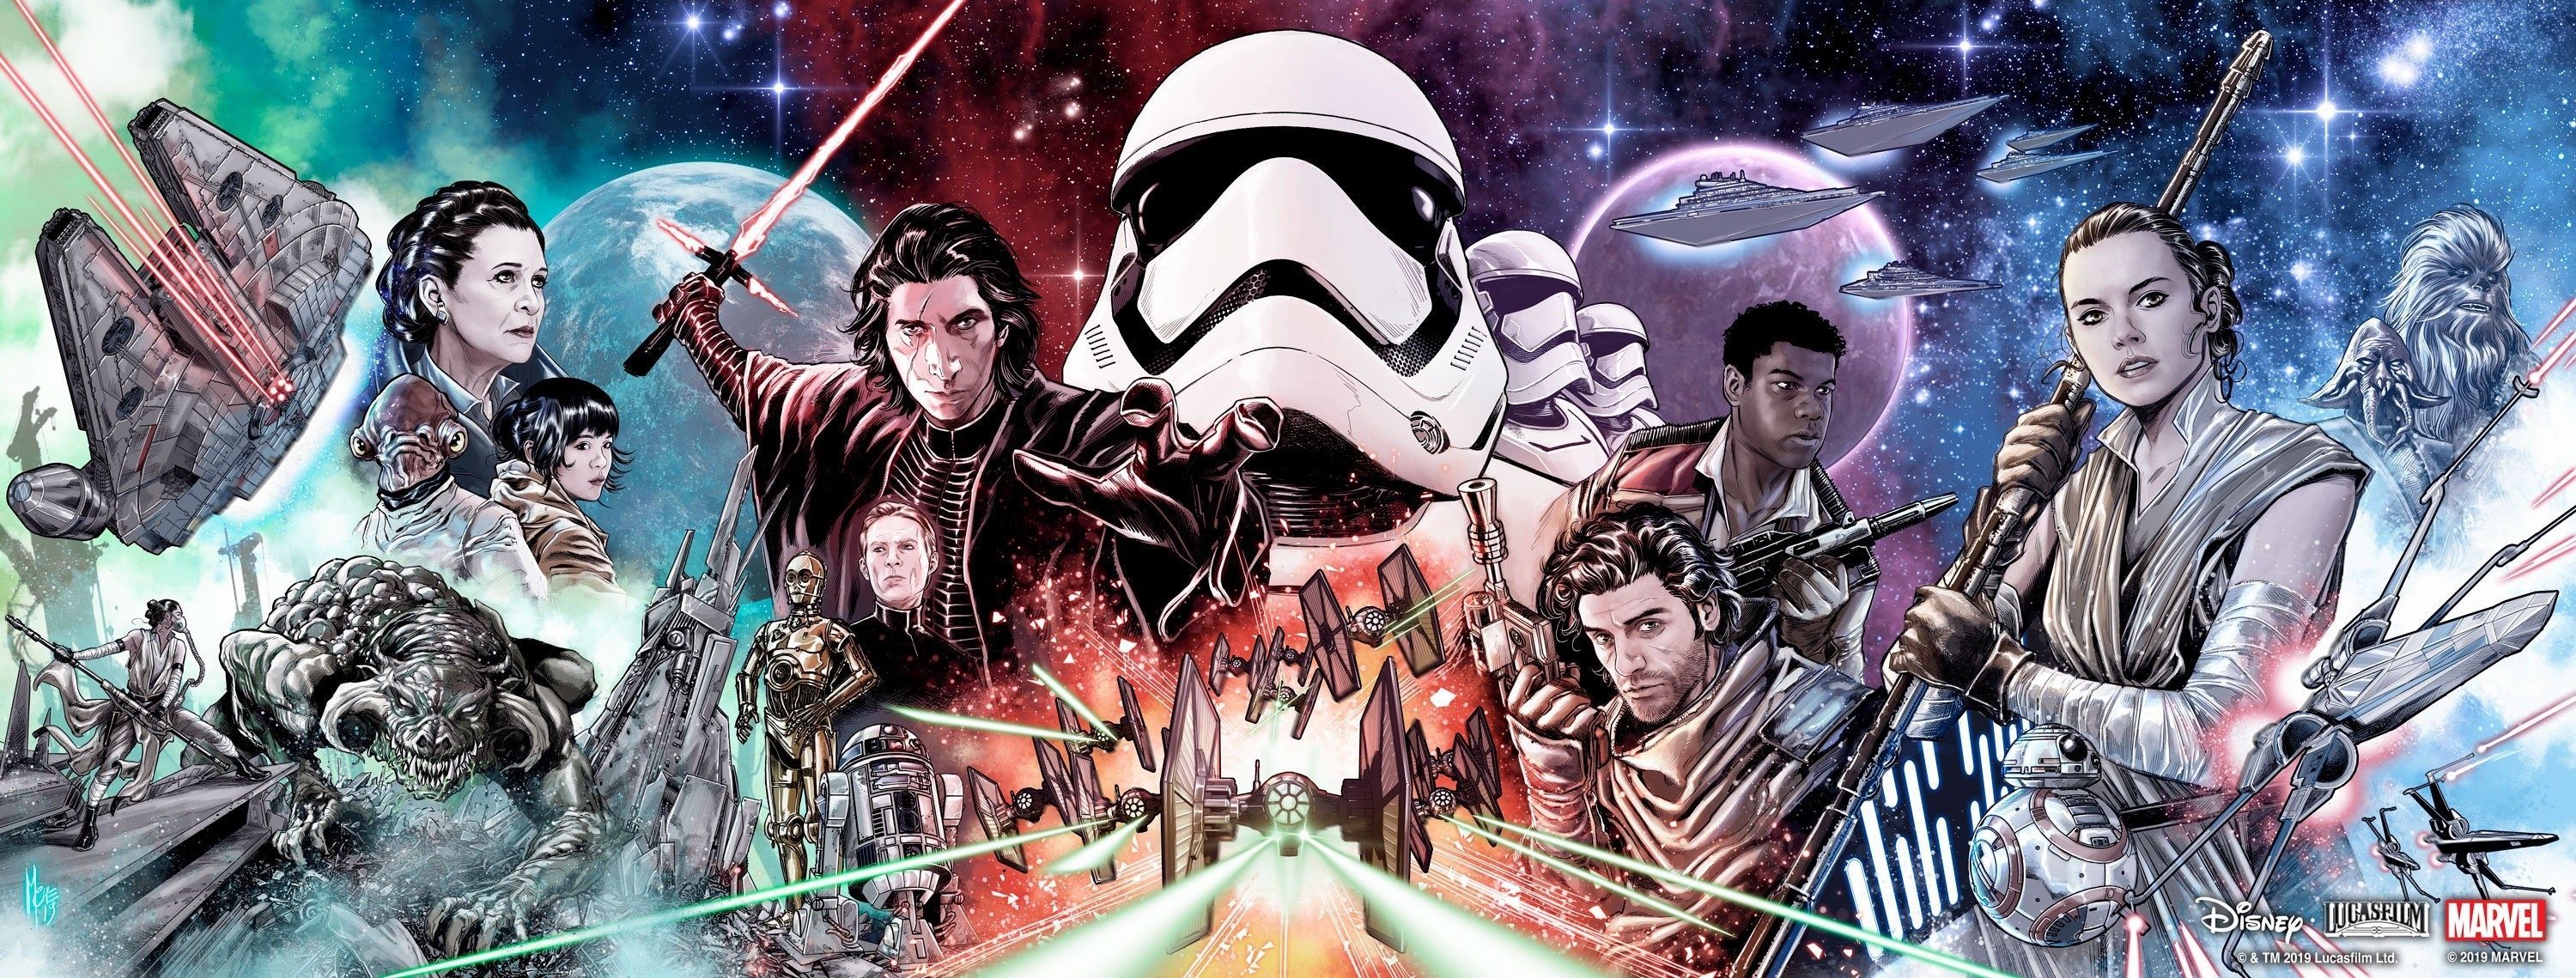 Original Star Wars Wallpaper Free Original Star Wars Background